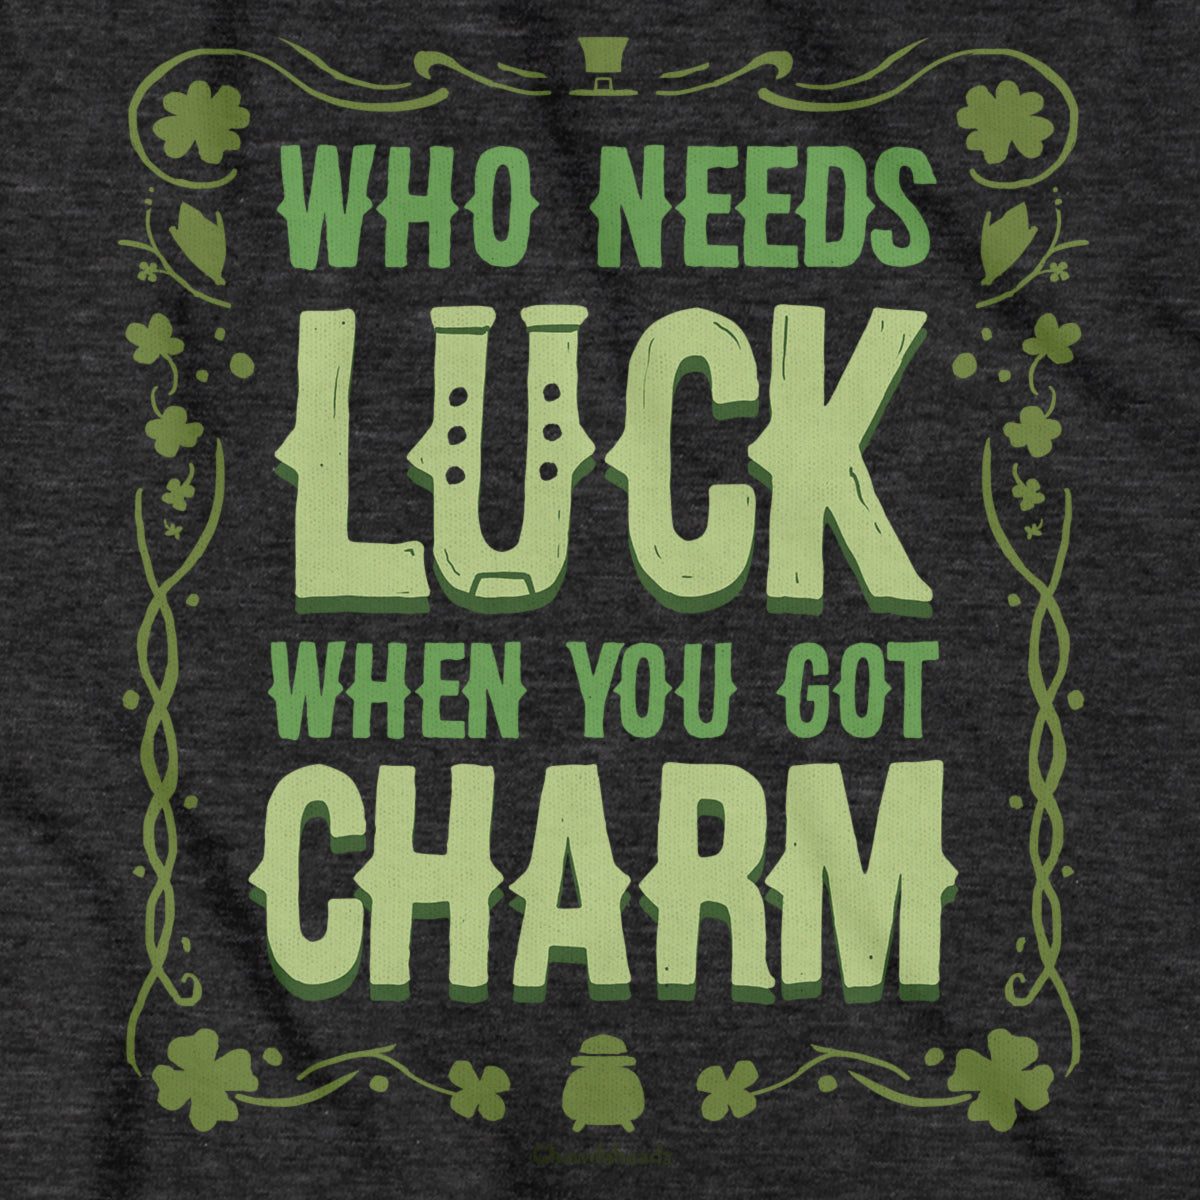 Who Needs Luck When You Got Charm T-Shirt - Chowdaheadz